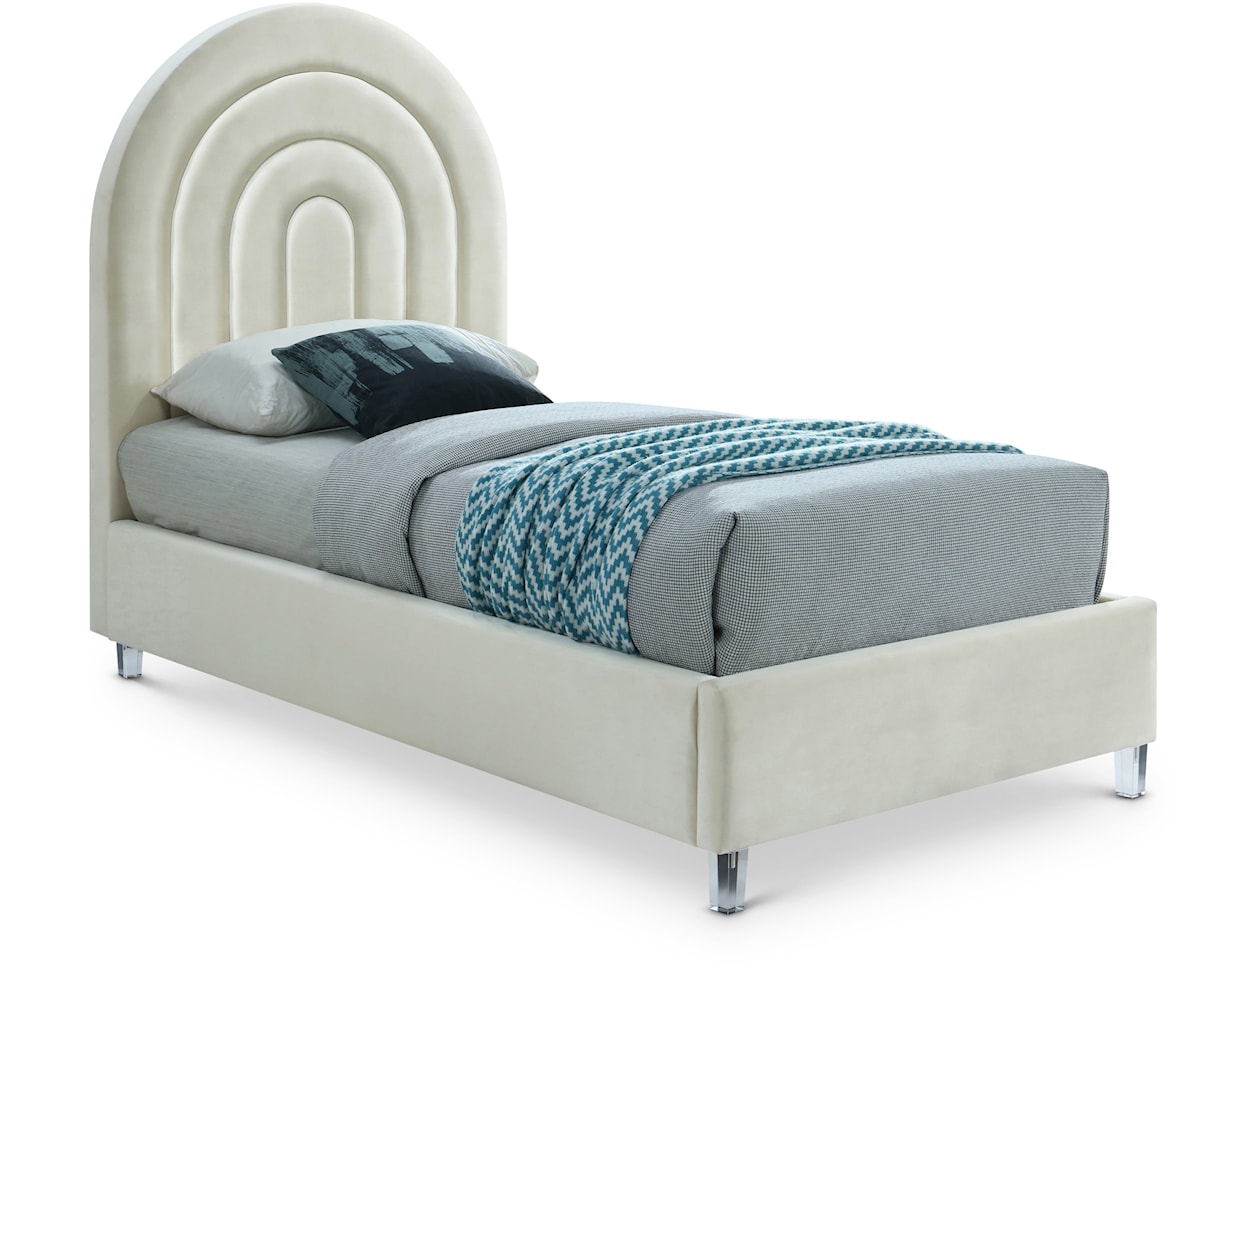 Meridian Furniture Rainbow Twin Bed